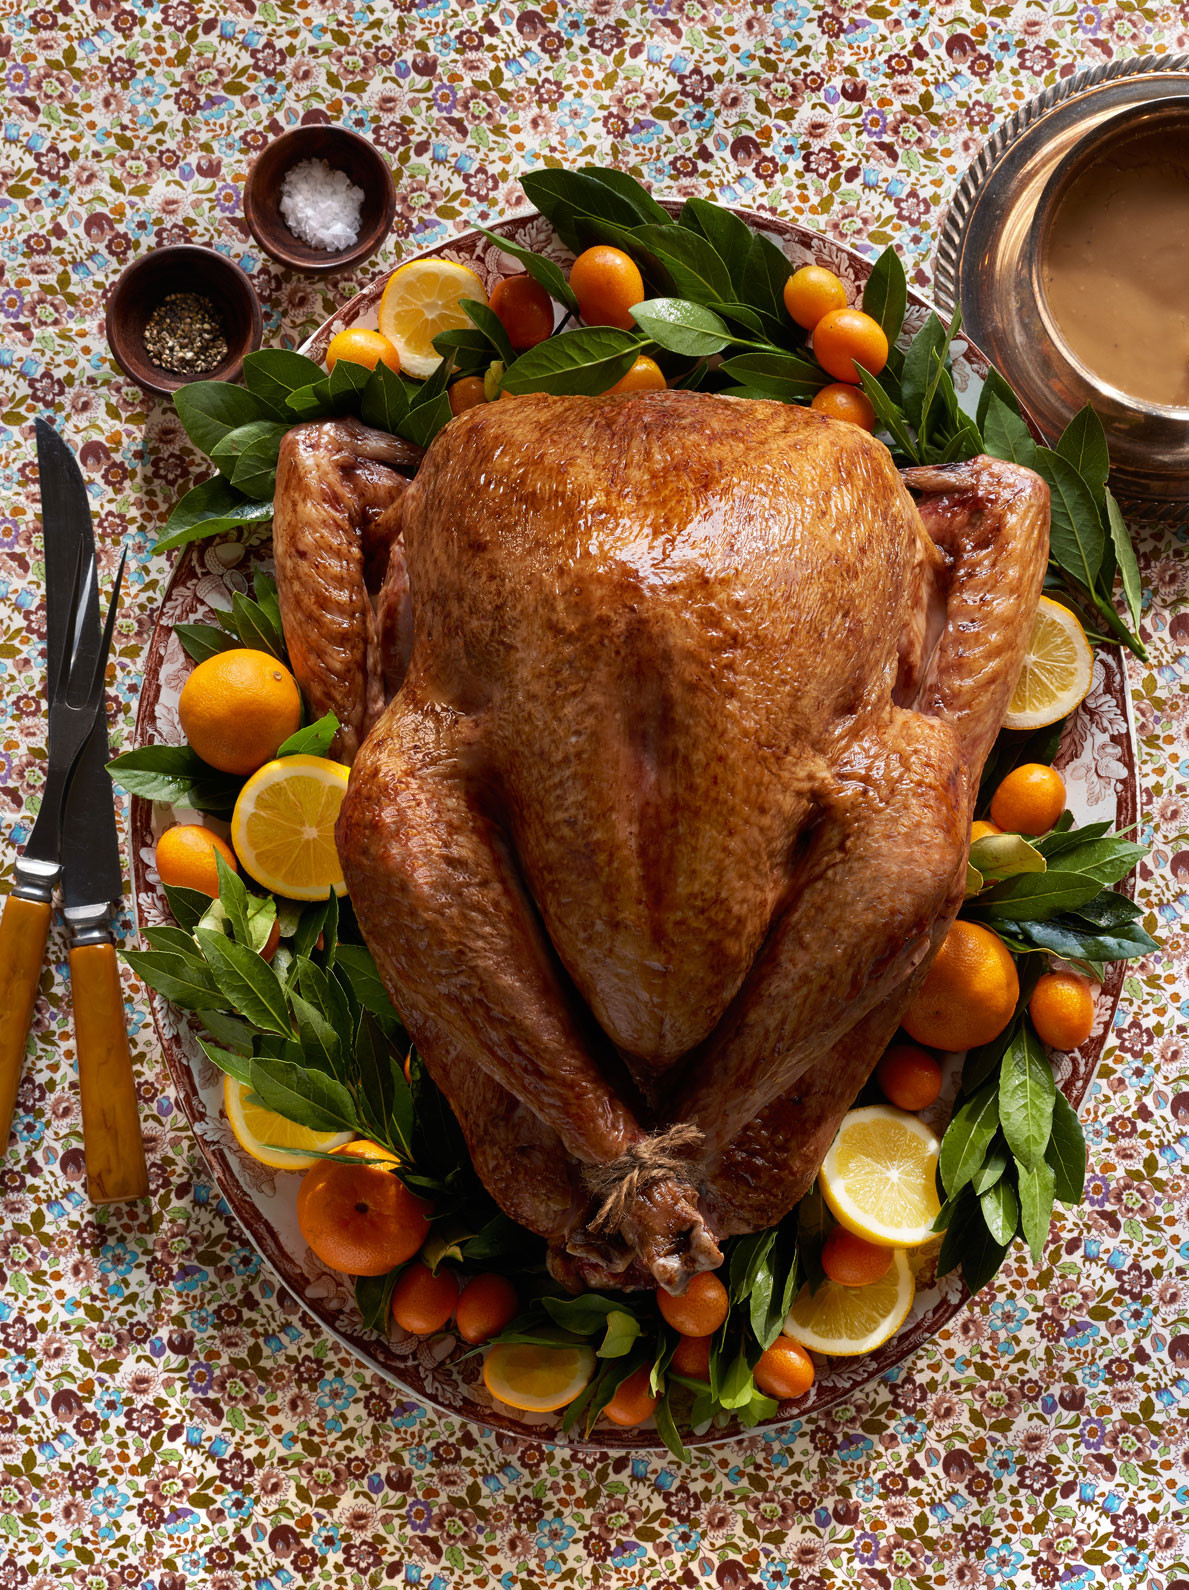 Thanksgiving Turkey Image
 25 Best Thanksgiving Turkey Recipes How To Cook Turkey